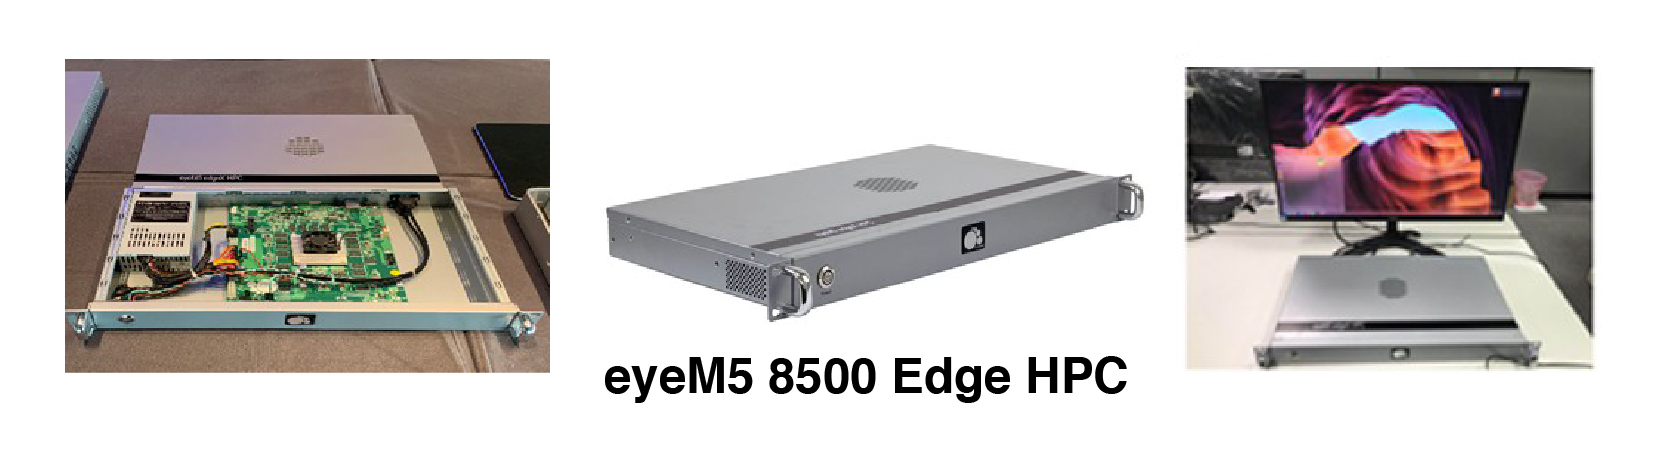 eyeM5 8500 edgeX HPC